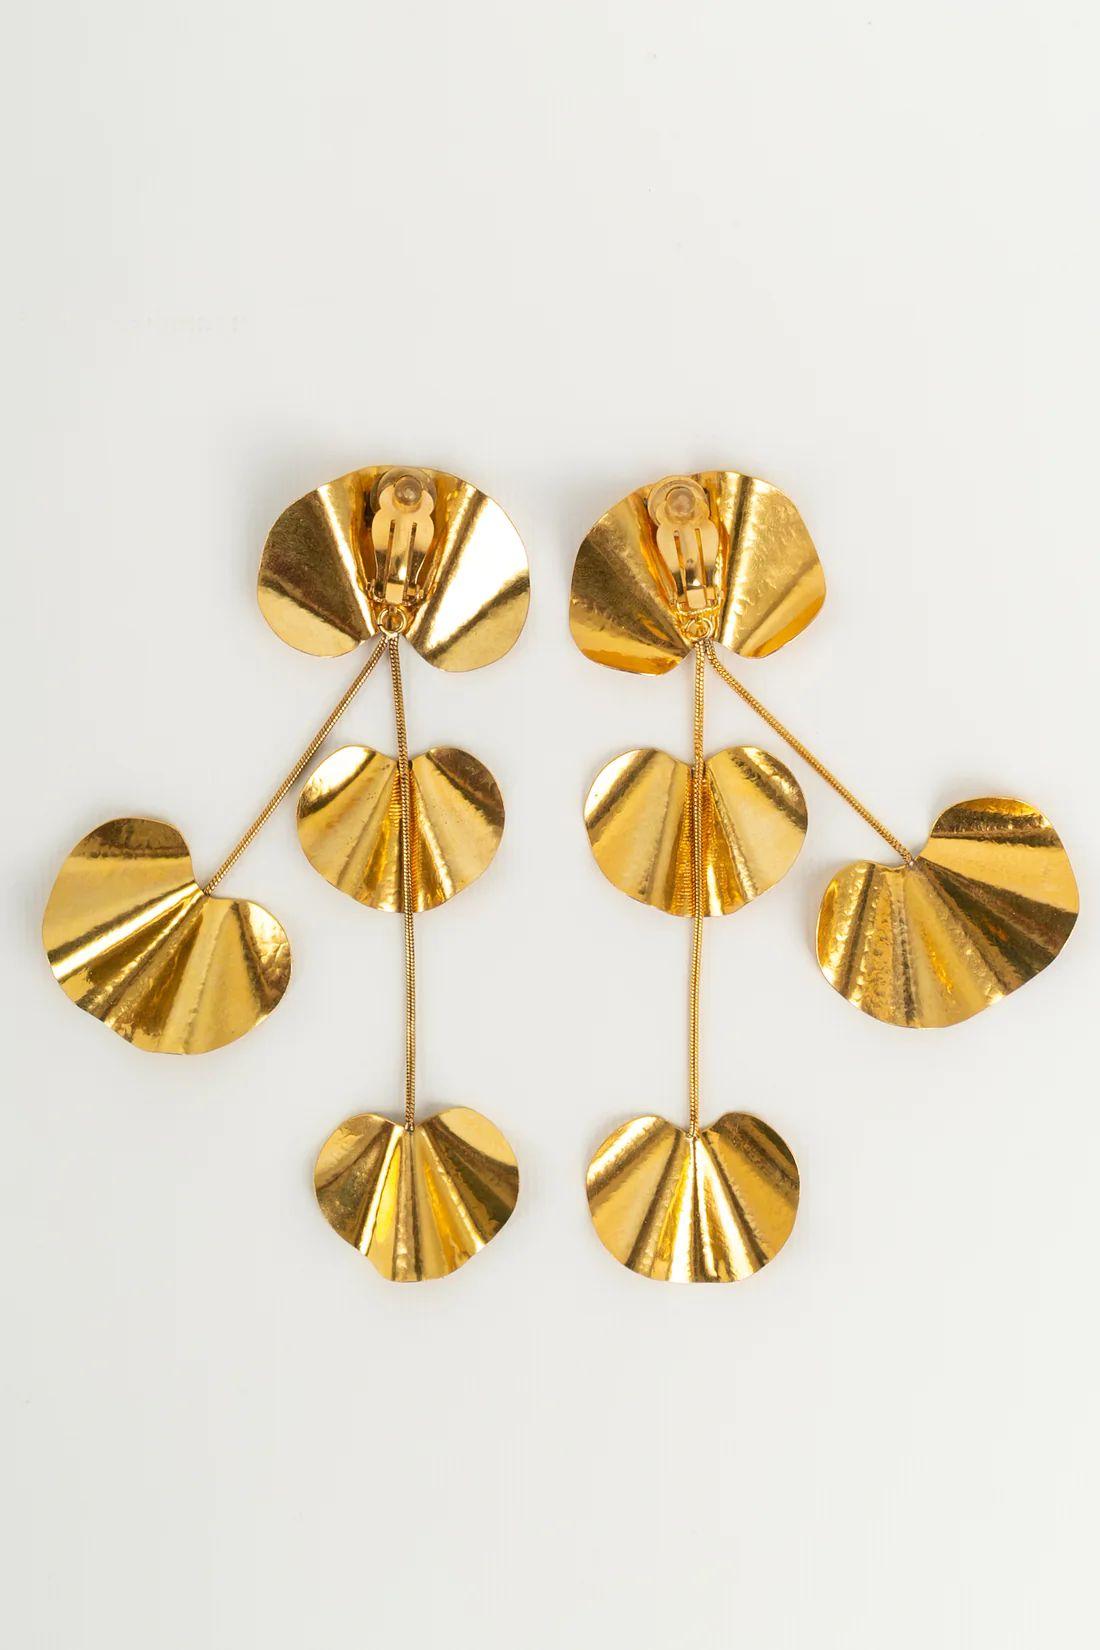 Van der Straeten - Clip earrings in gold metal, 